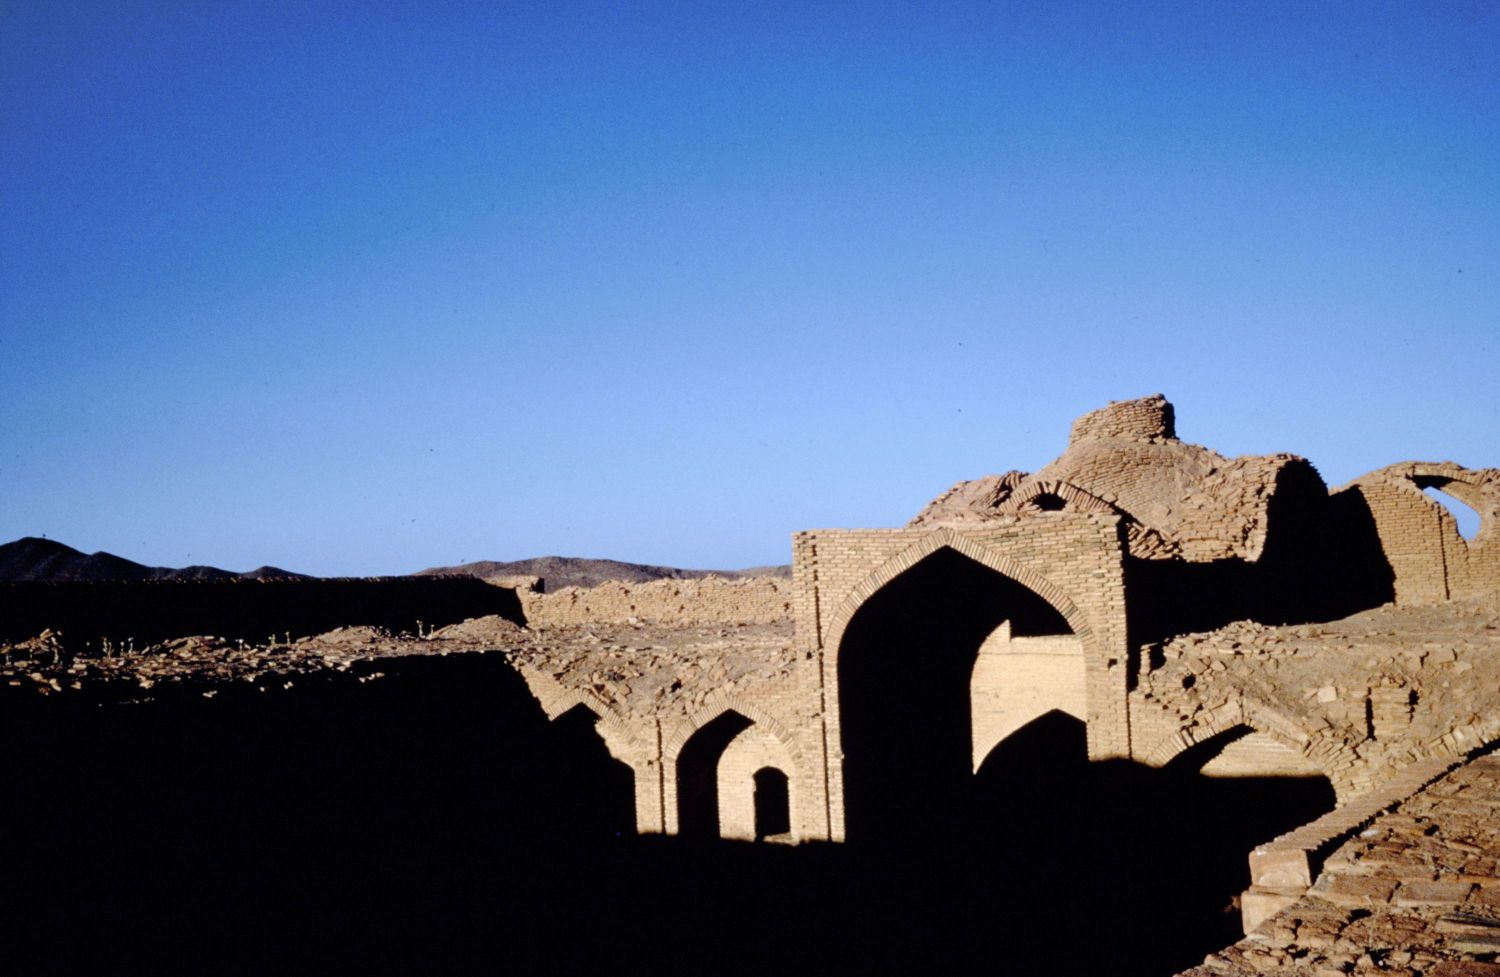 Caravamserai on Na'in Road, Iran: view into courtyard.